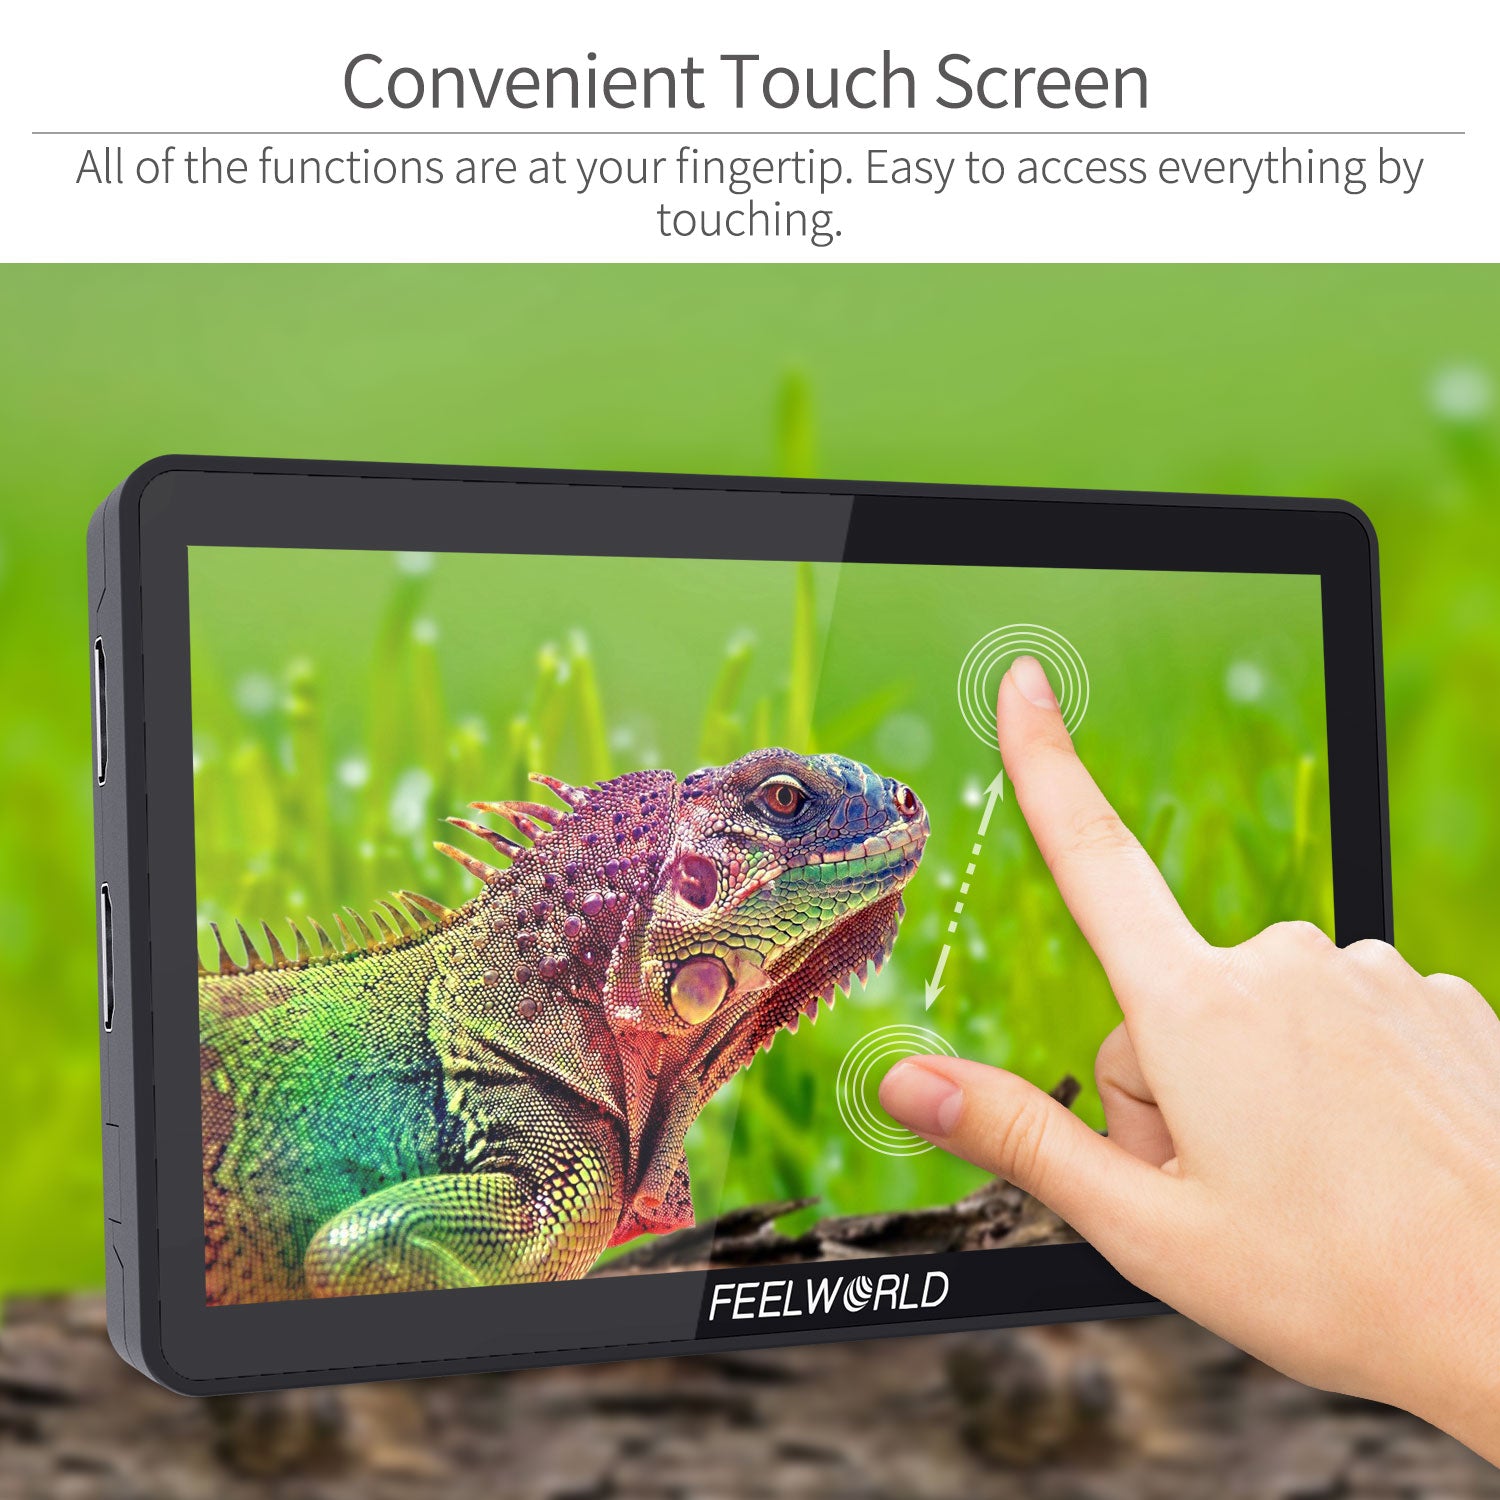 FEELWORLD F6 PLUS 5.5” 3D LUT Touchscreen 4K HDMI Camera